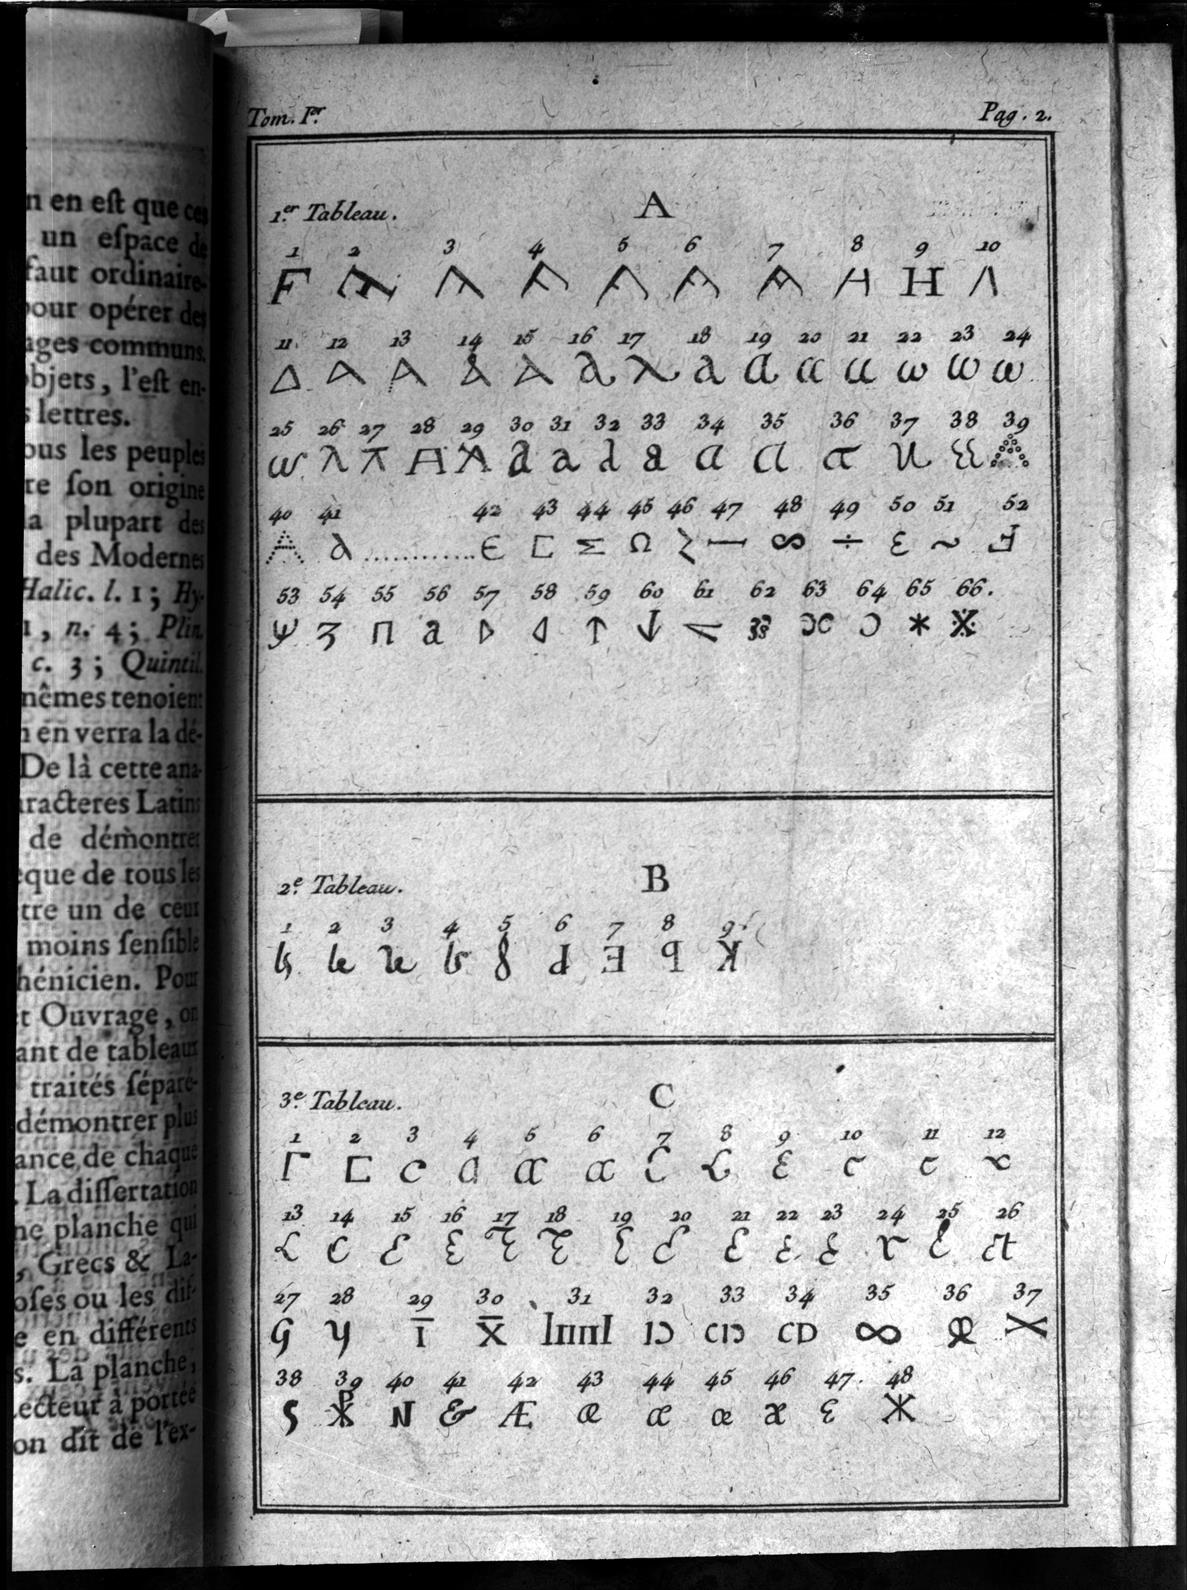 [Manual de escrita antiga : tabela : letras a, b, c]